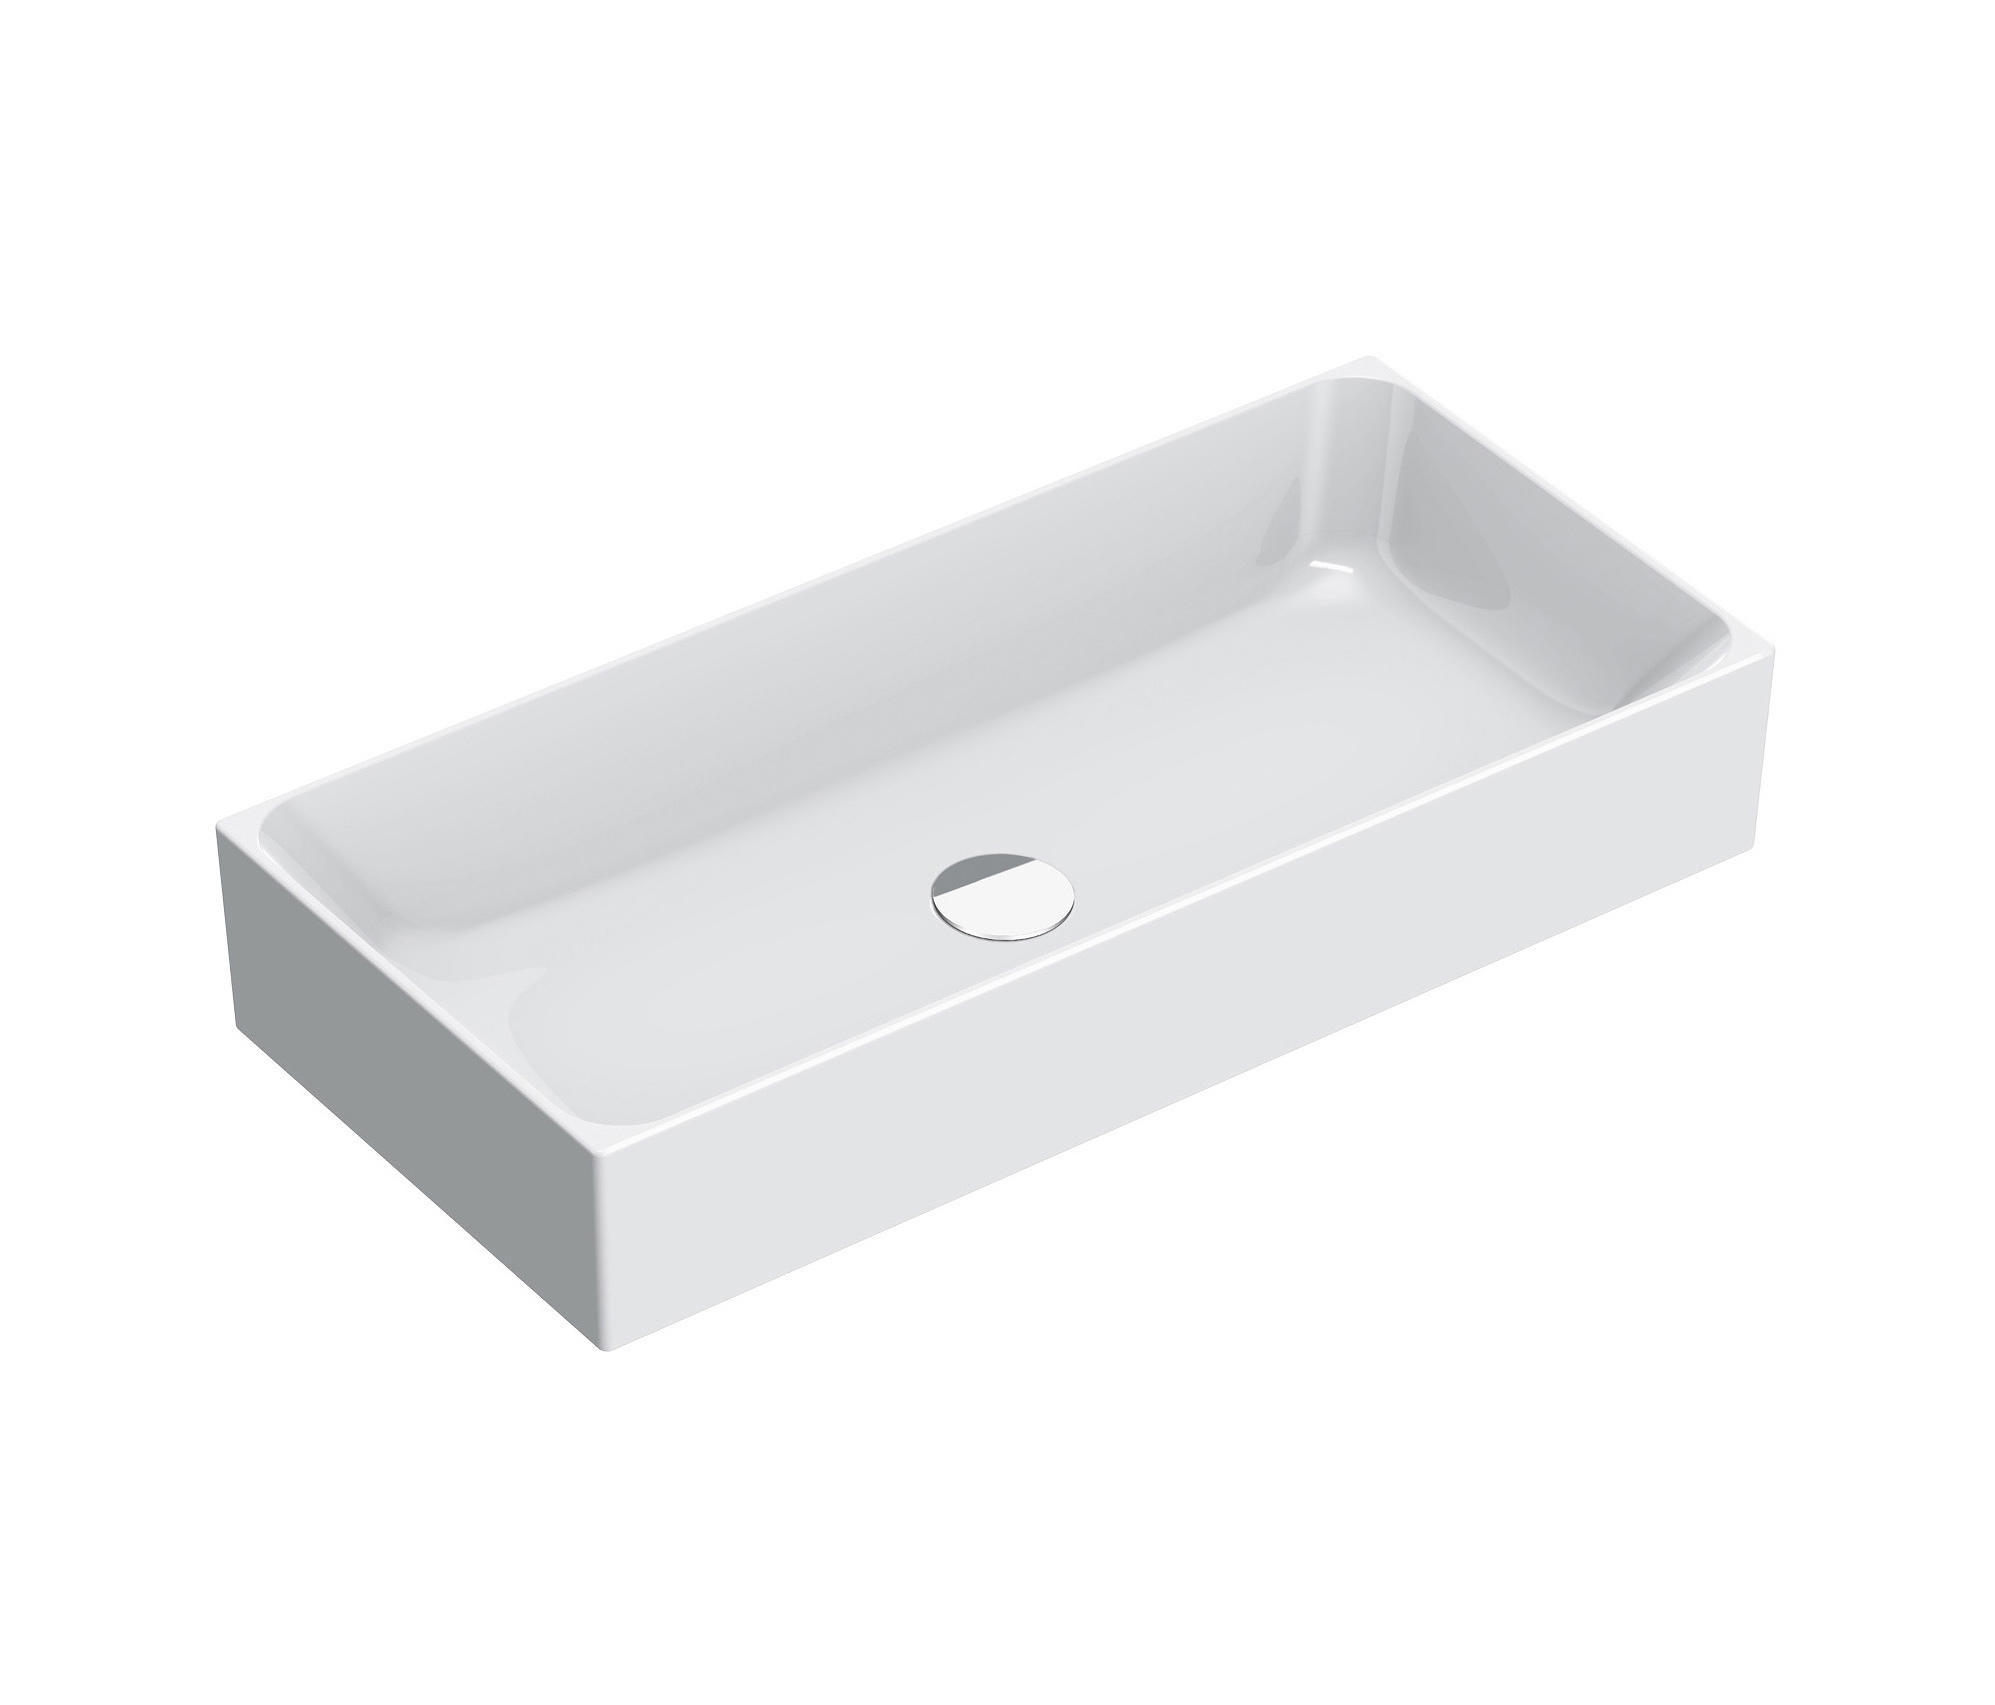 ZERO 75X35 - Wash basins from Ceramica Catalano | Architonic